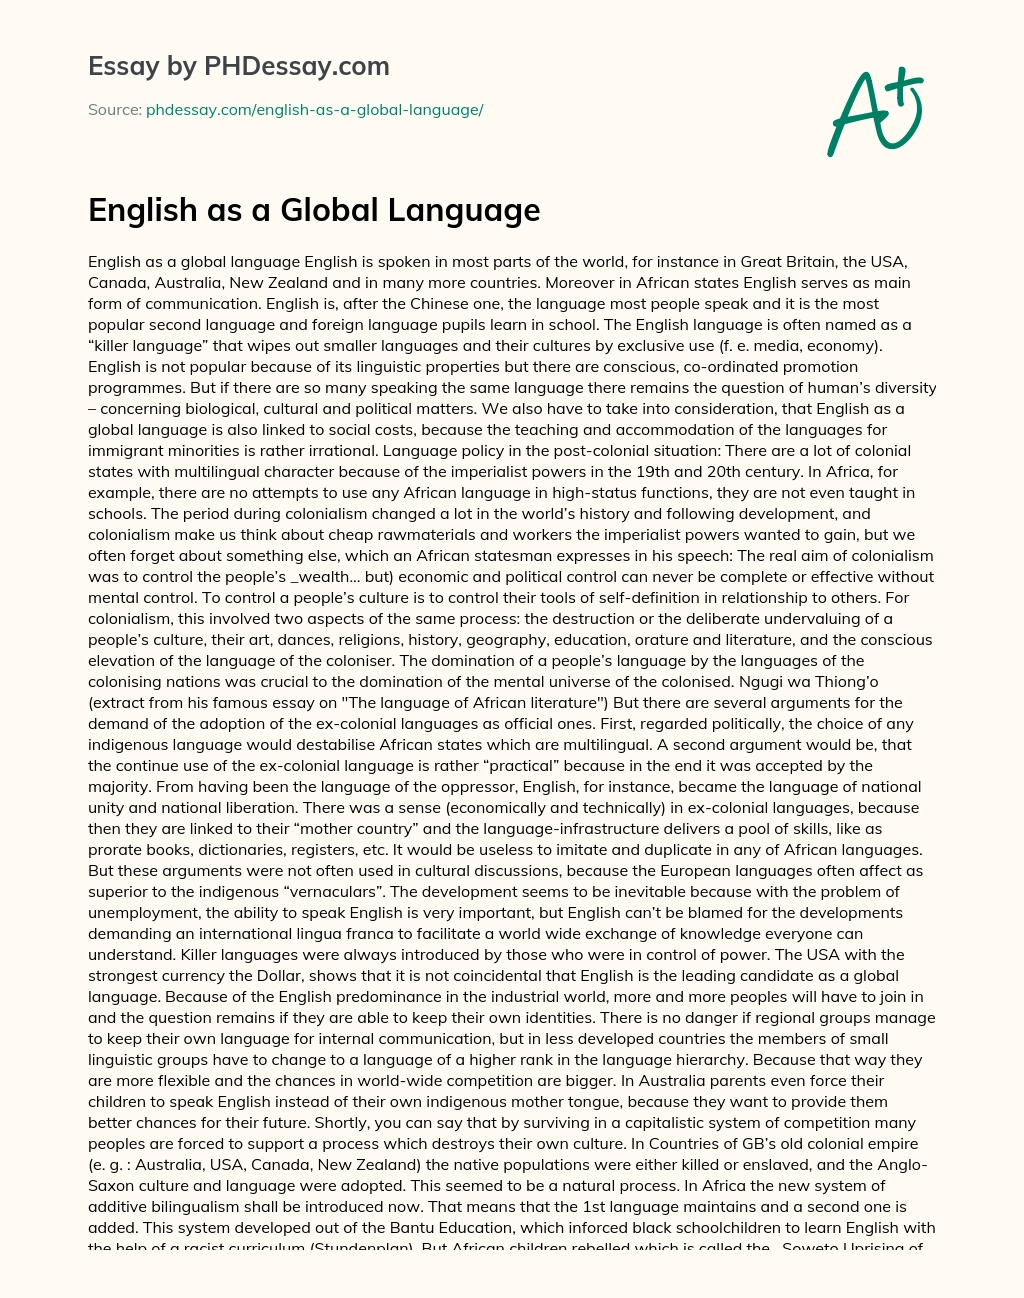 English as a Global Language essay